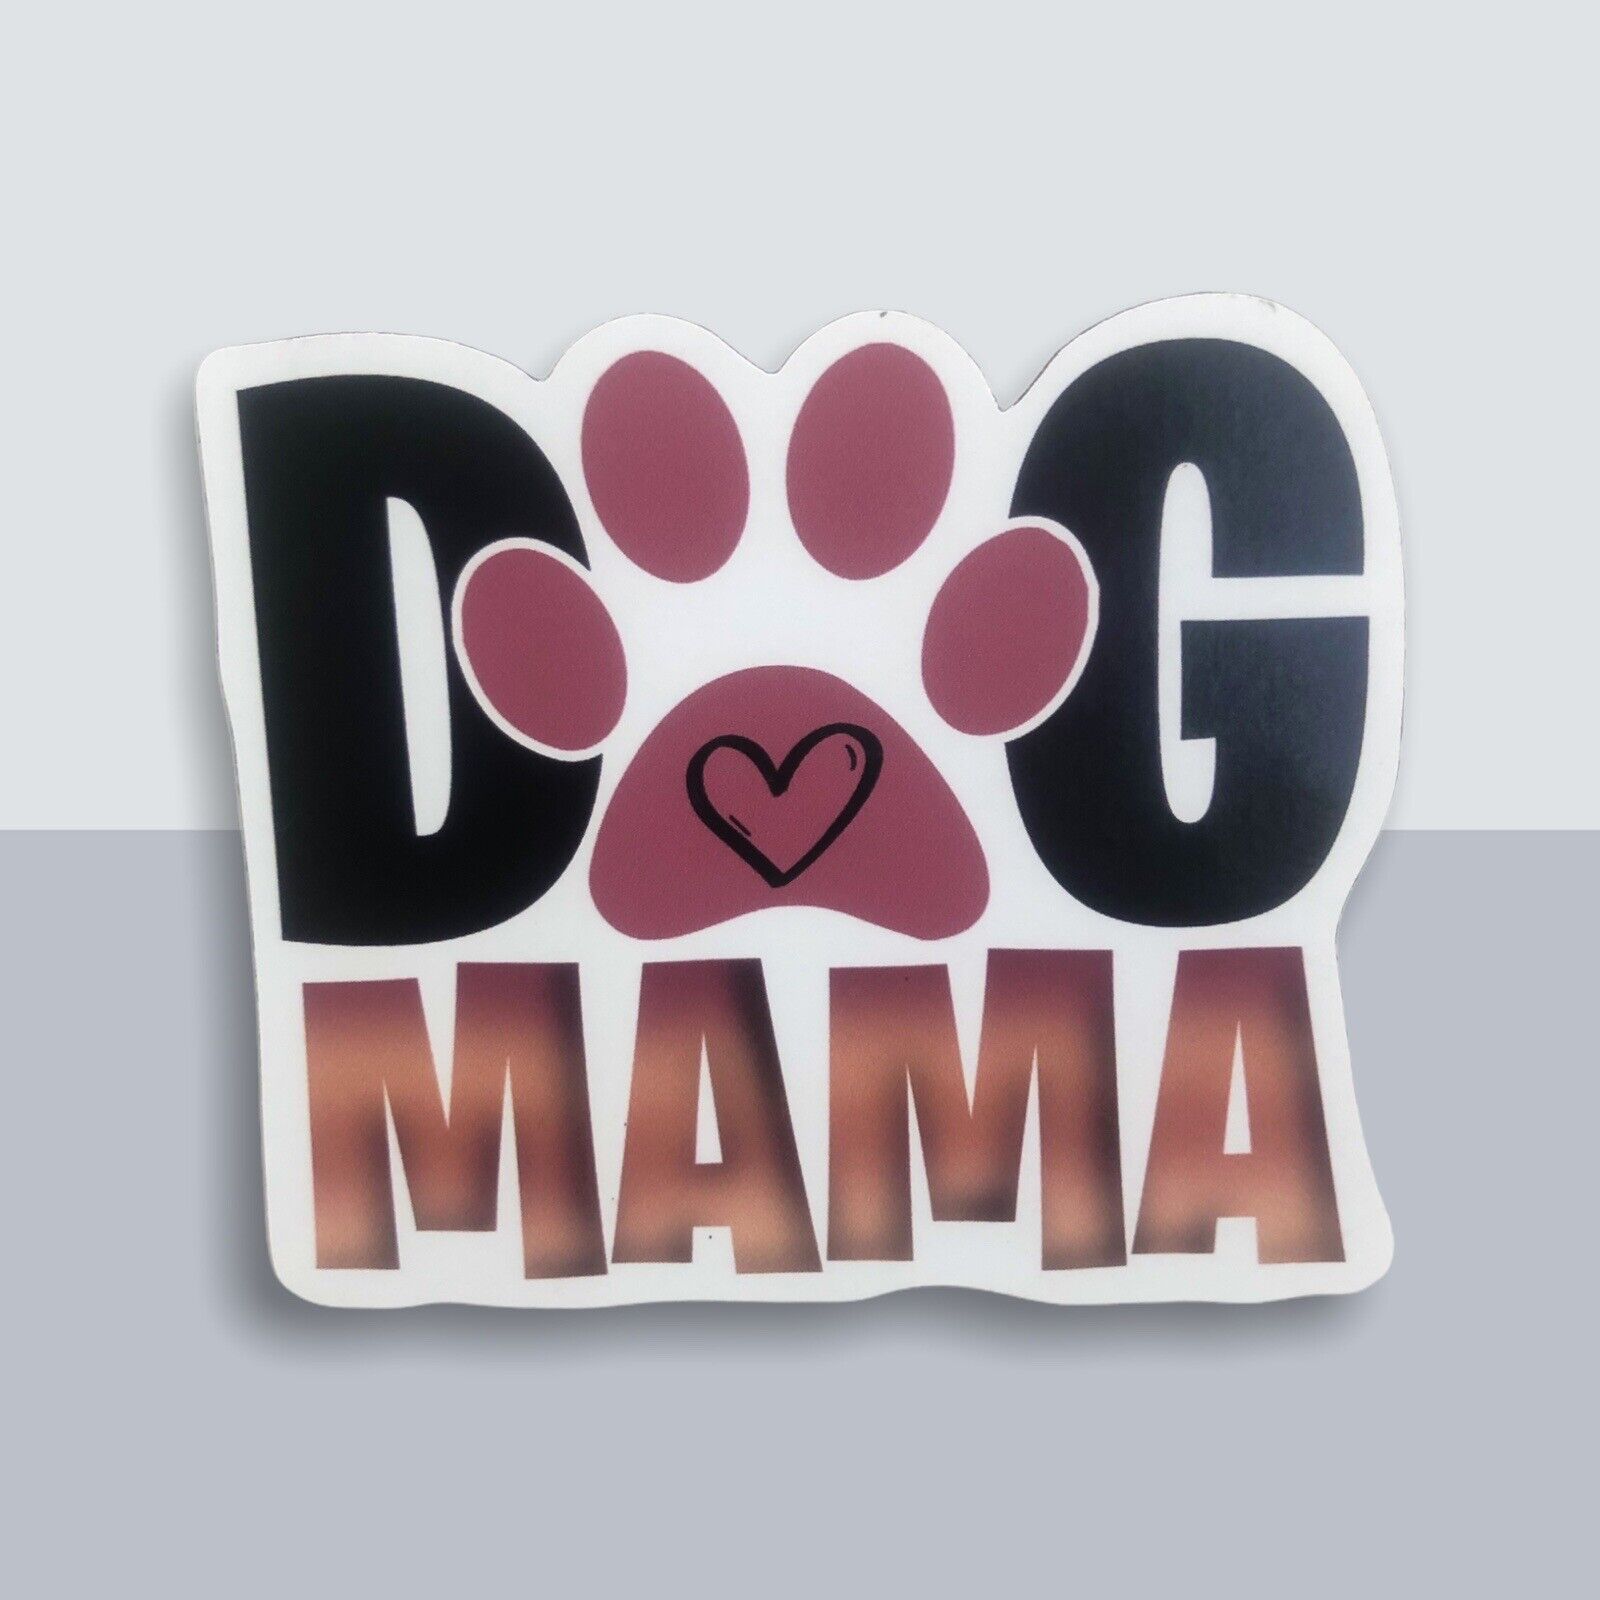 Dog Mama Magnet - Dog paw Fridge Car Magnet Small 3” X 3” Size - NEW